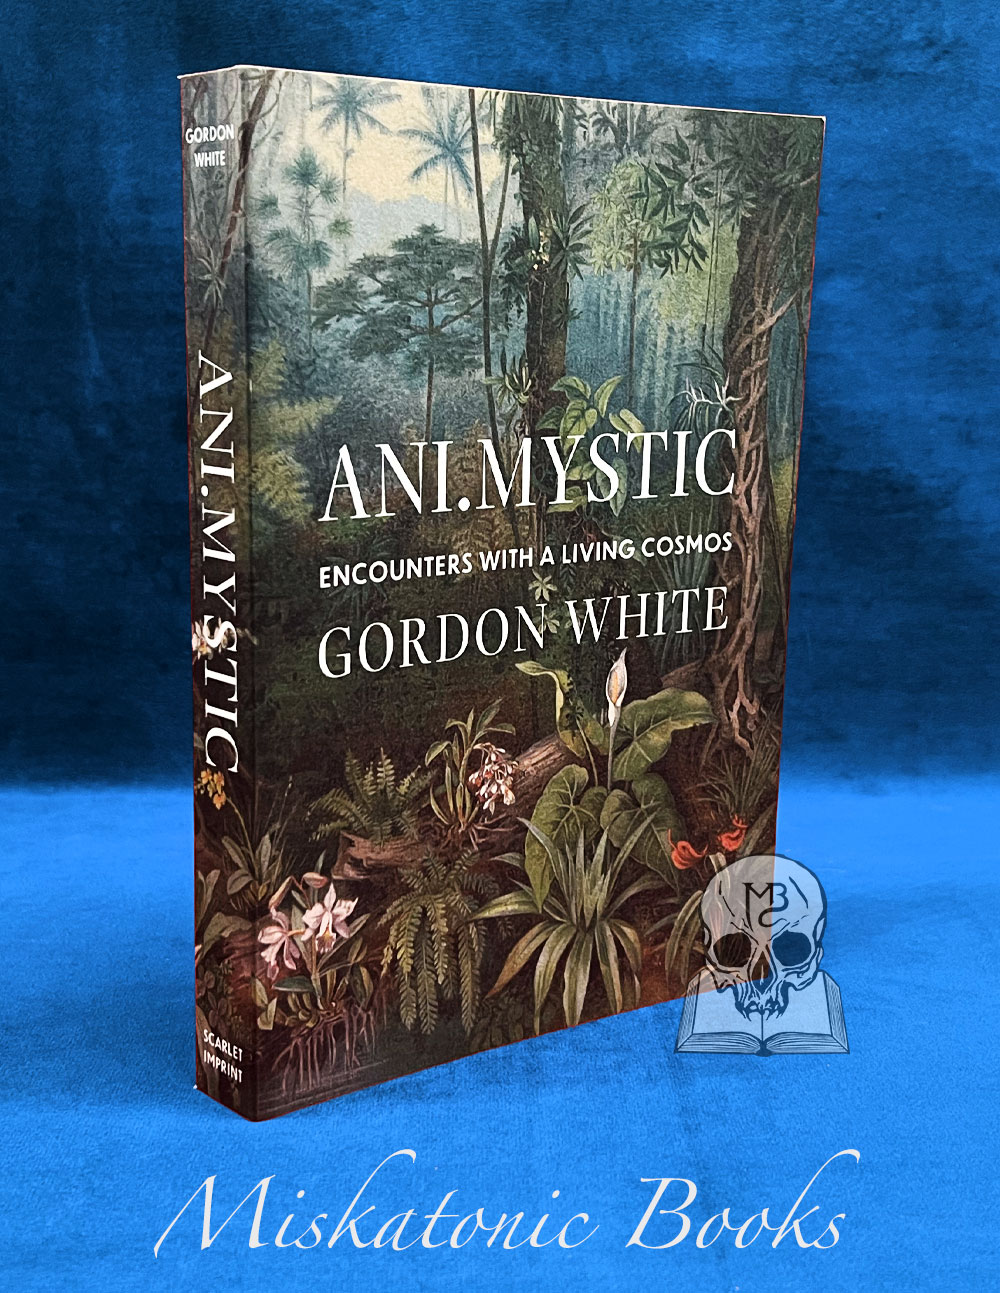 ANI.MYSTIC by Gordon White - Paperback Edition